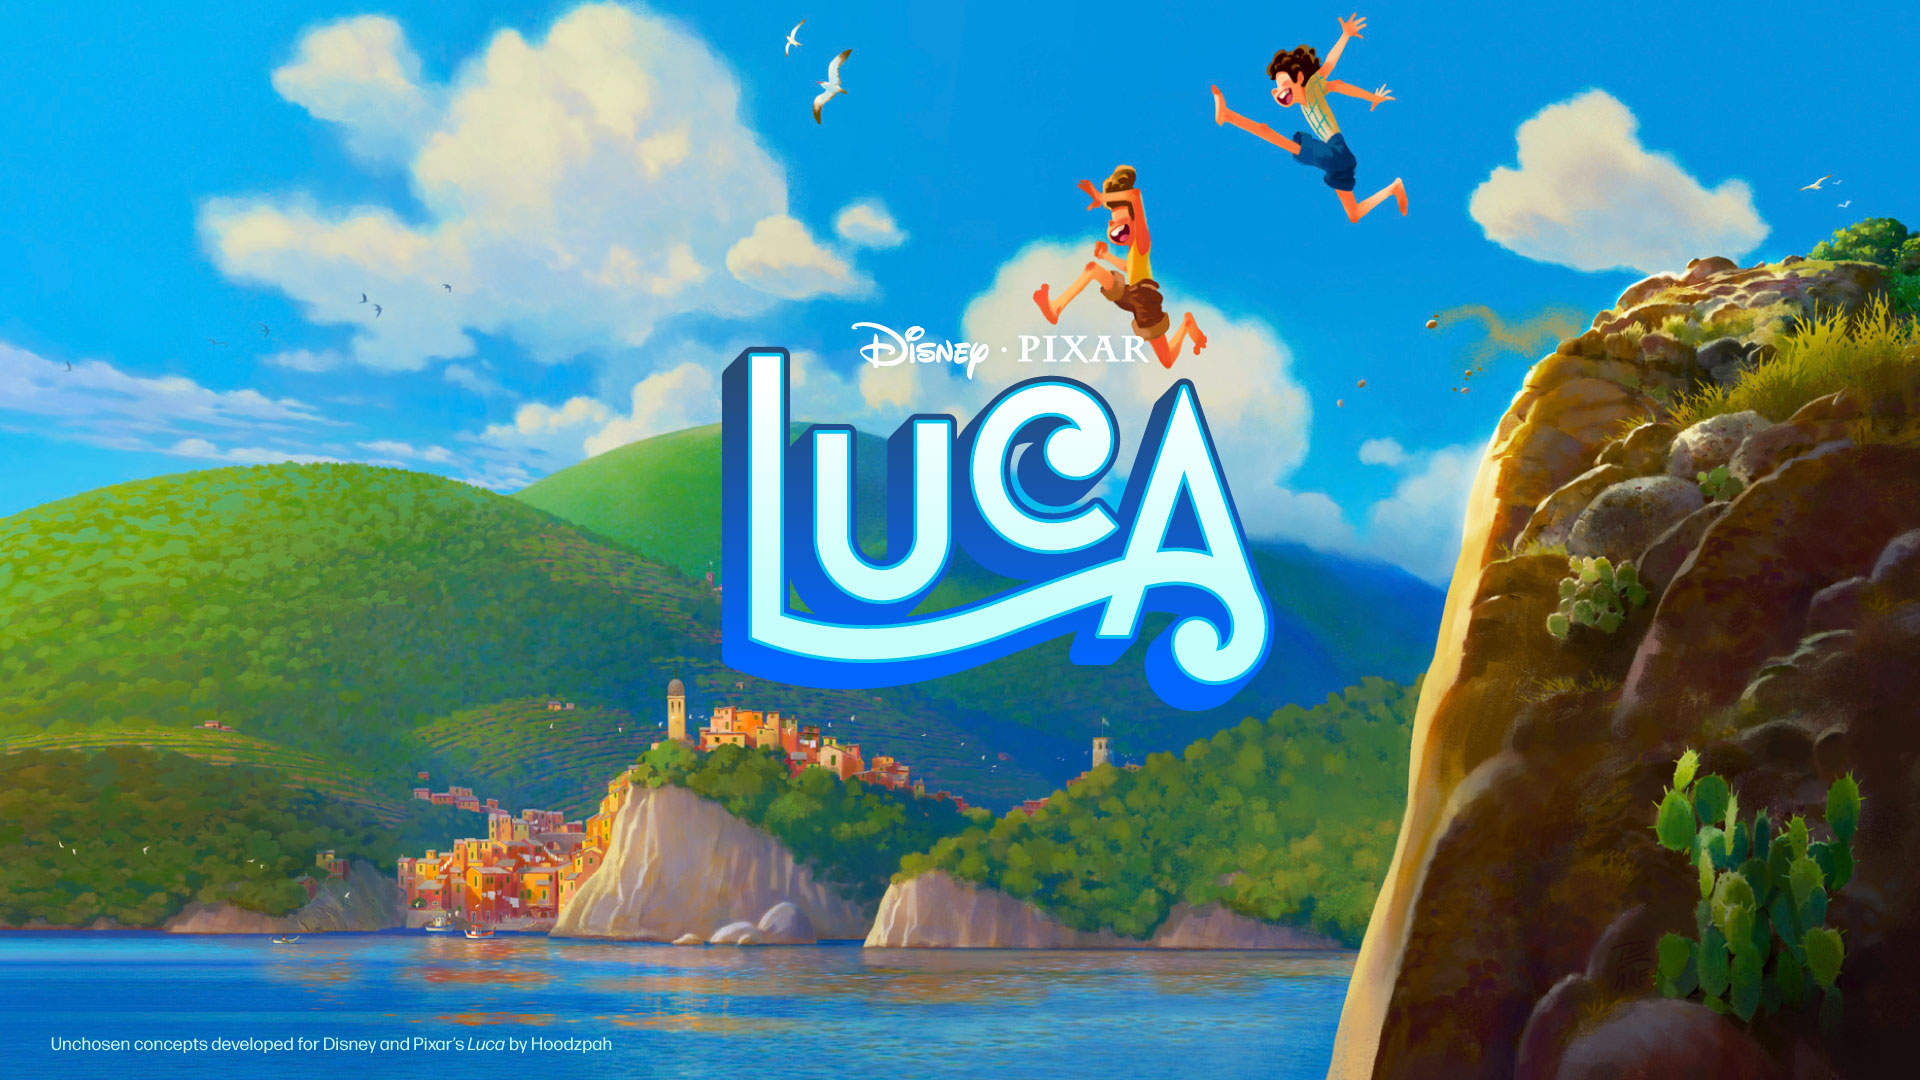 Luca Movie Title Treatment Unchosen Concepts by Hoodzpah branding Studio for Disney Pixar